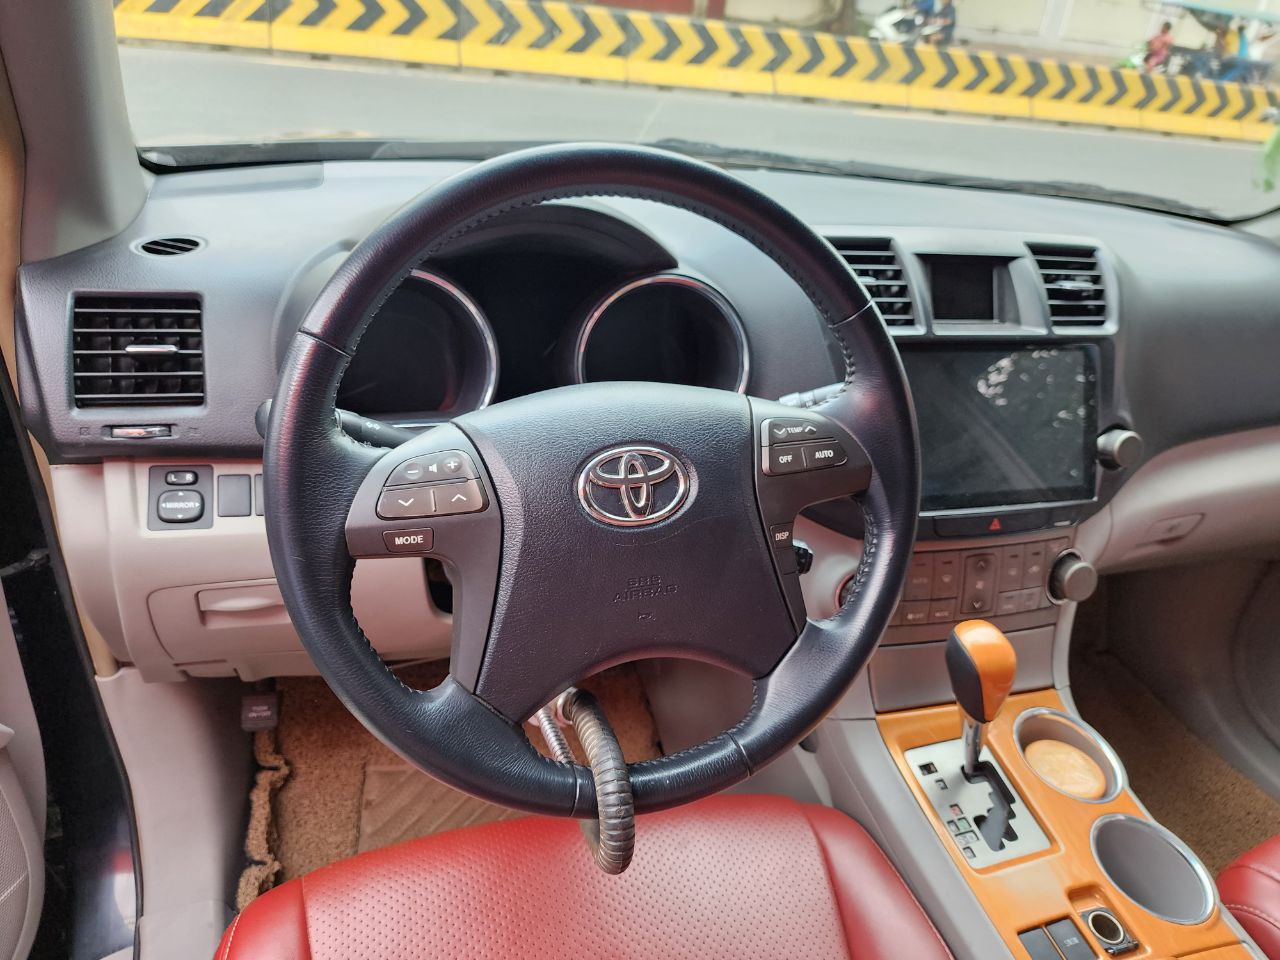 Toyota Highlander 2008 តំលៃពិសេស